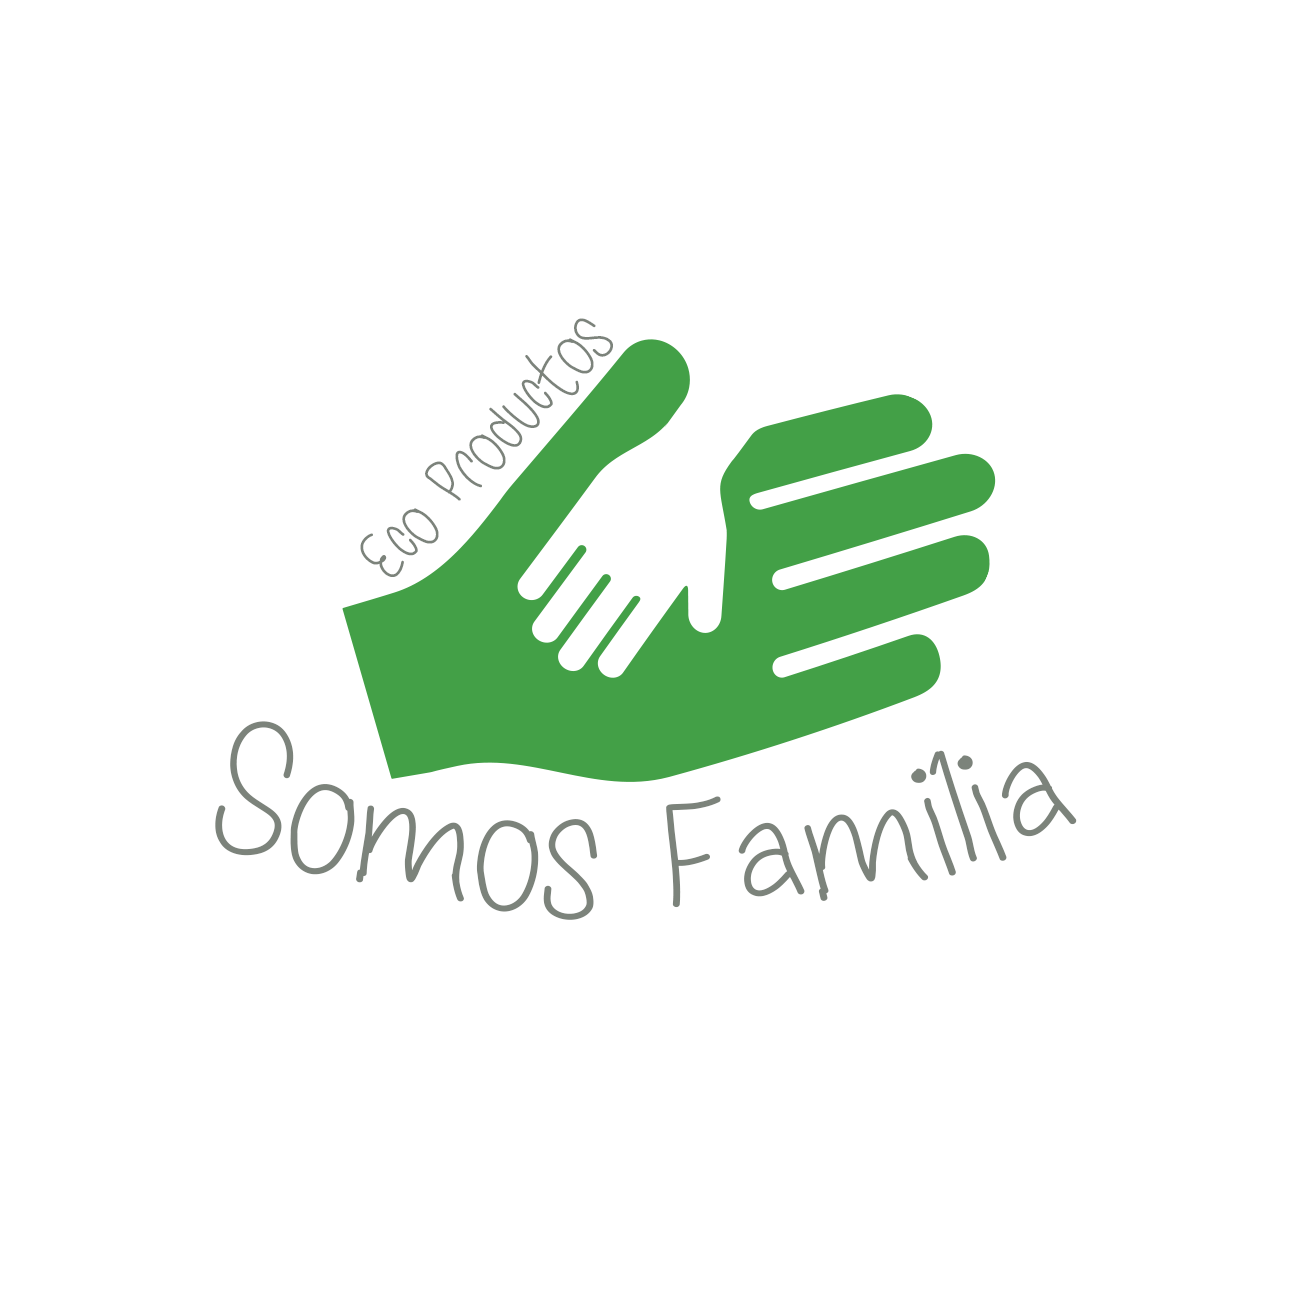 SOMOSFAMILIA ONG